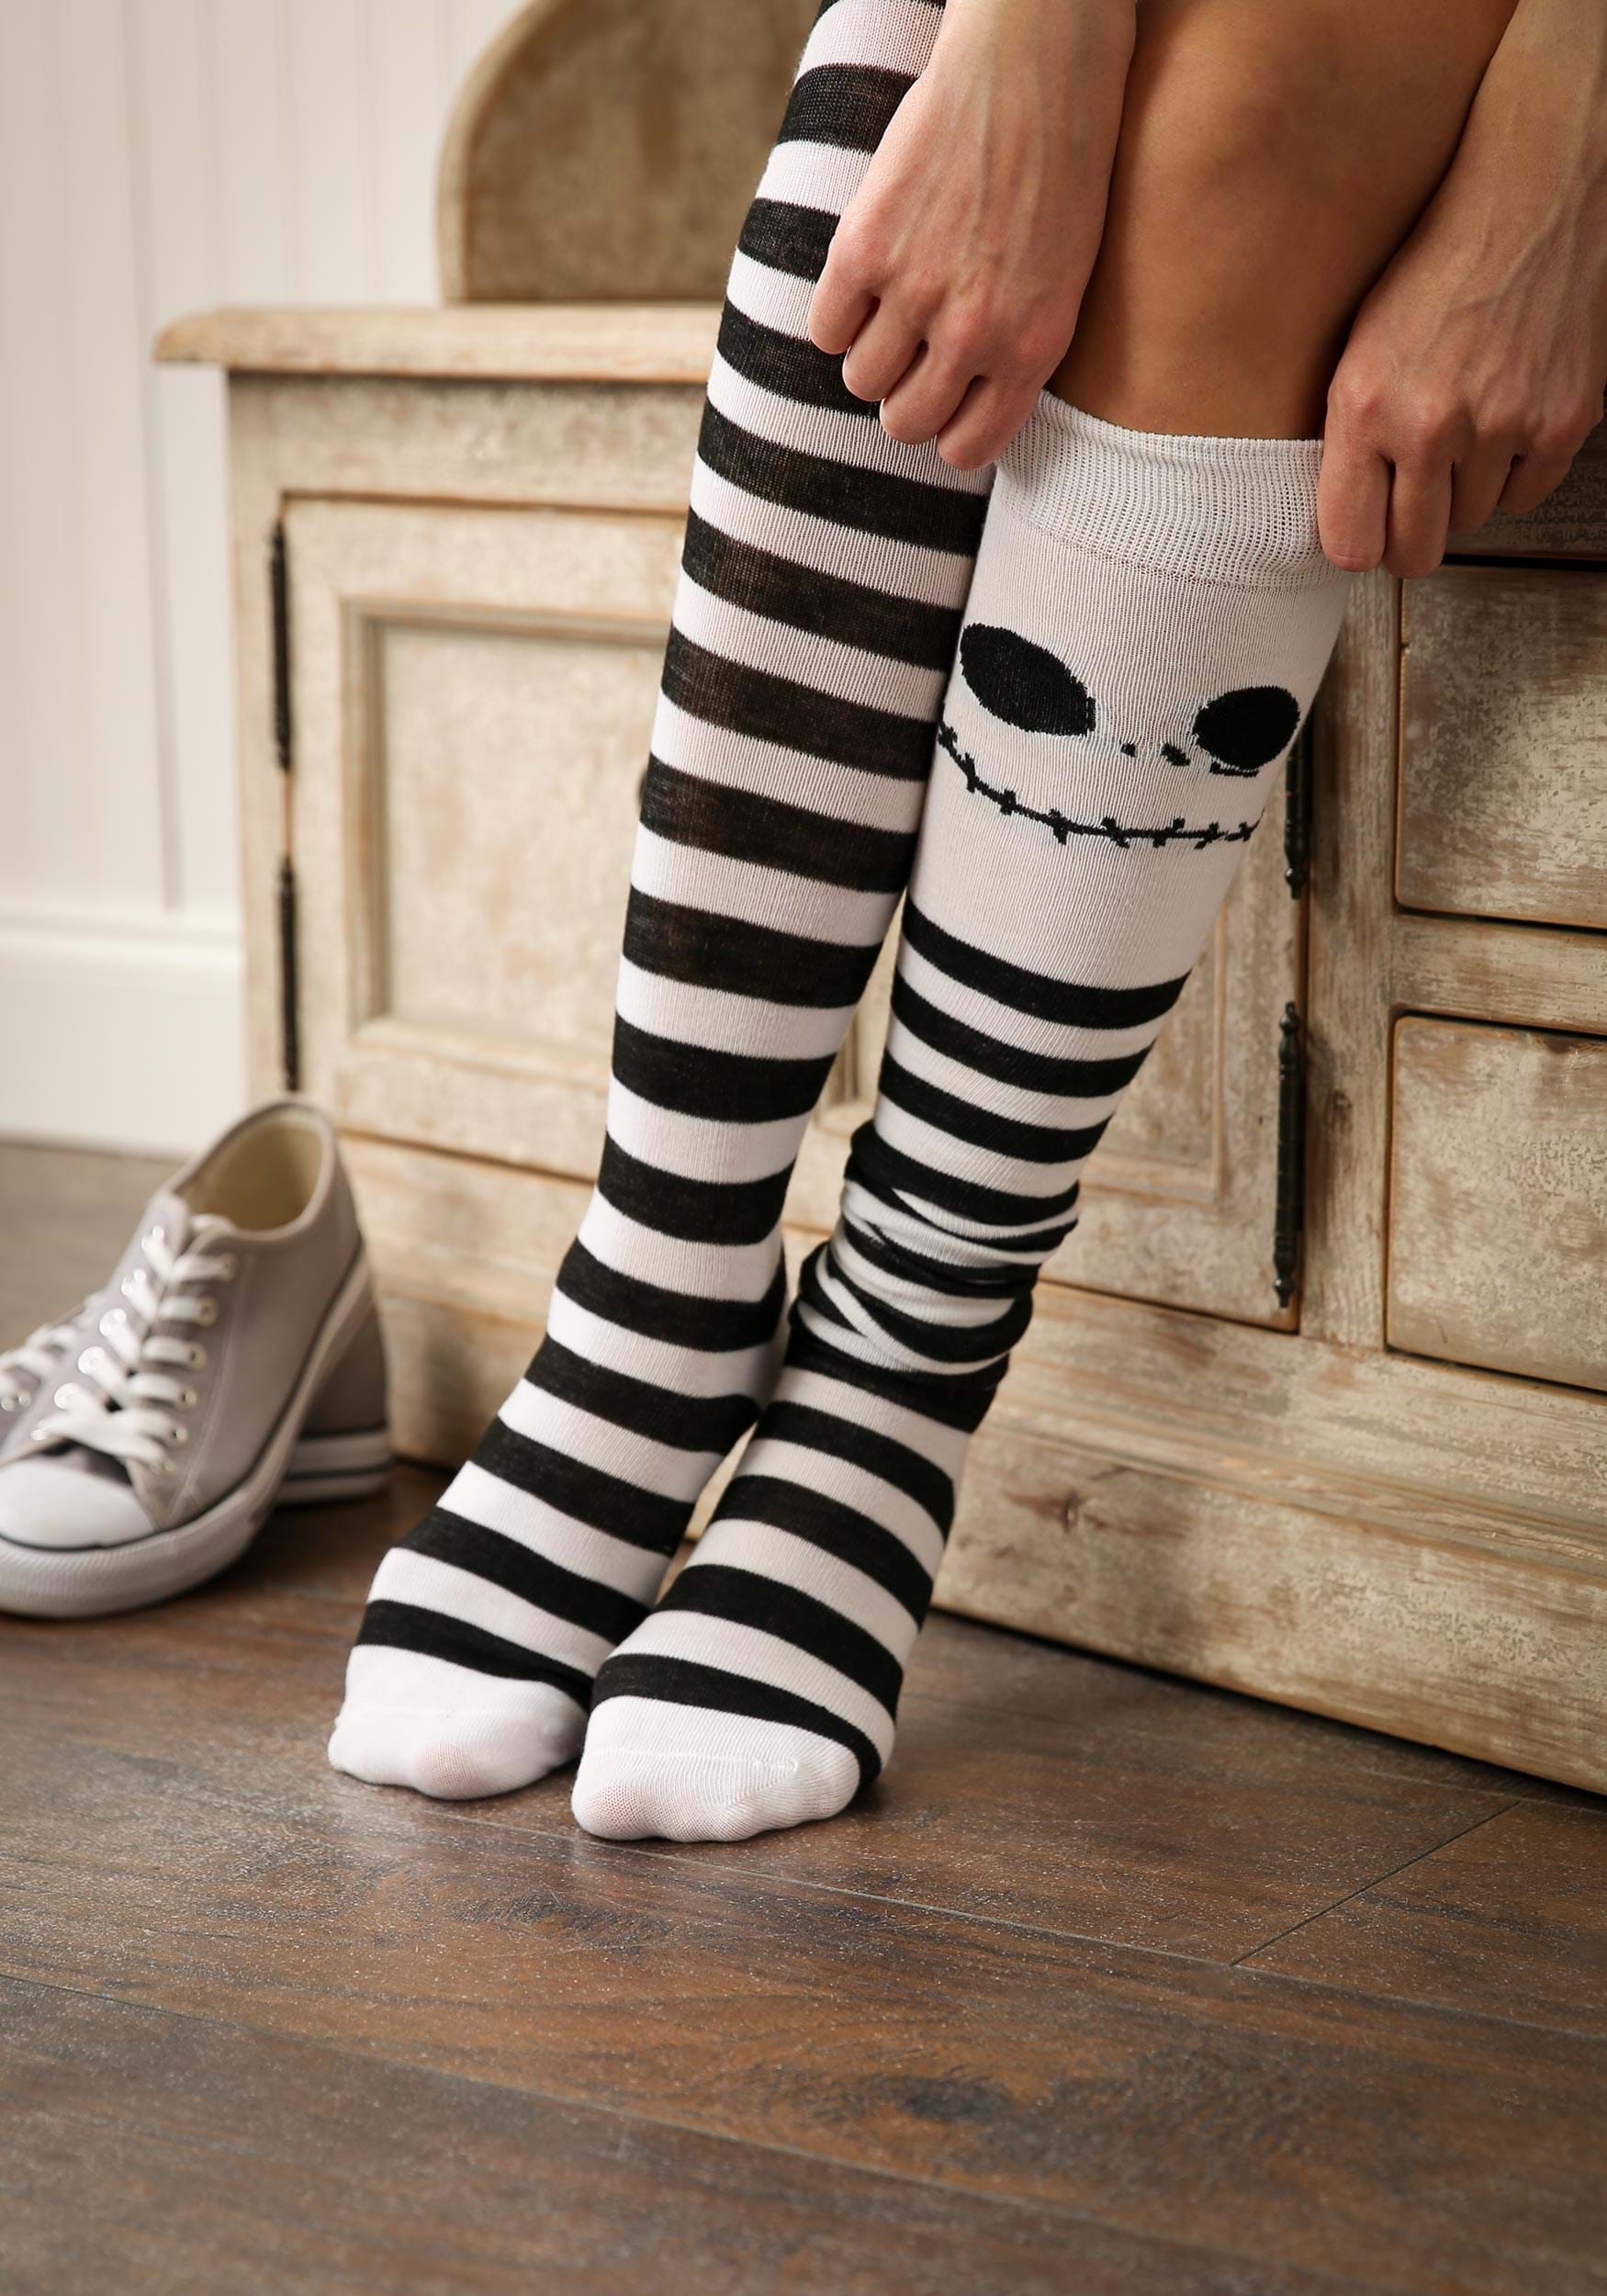 Over the Knee Socks Stripe Costume Xmas Accessory Halloween Wednesday Addams 